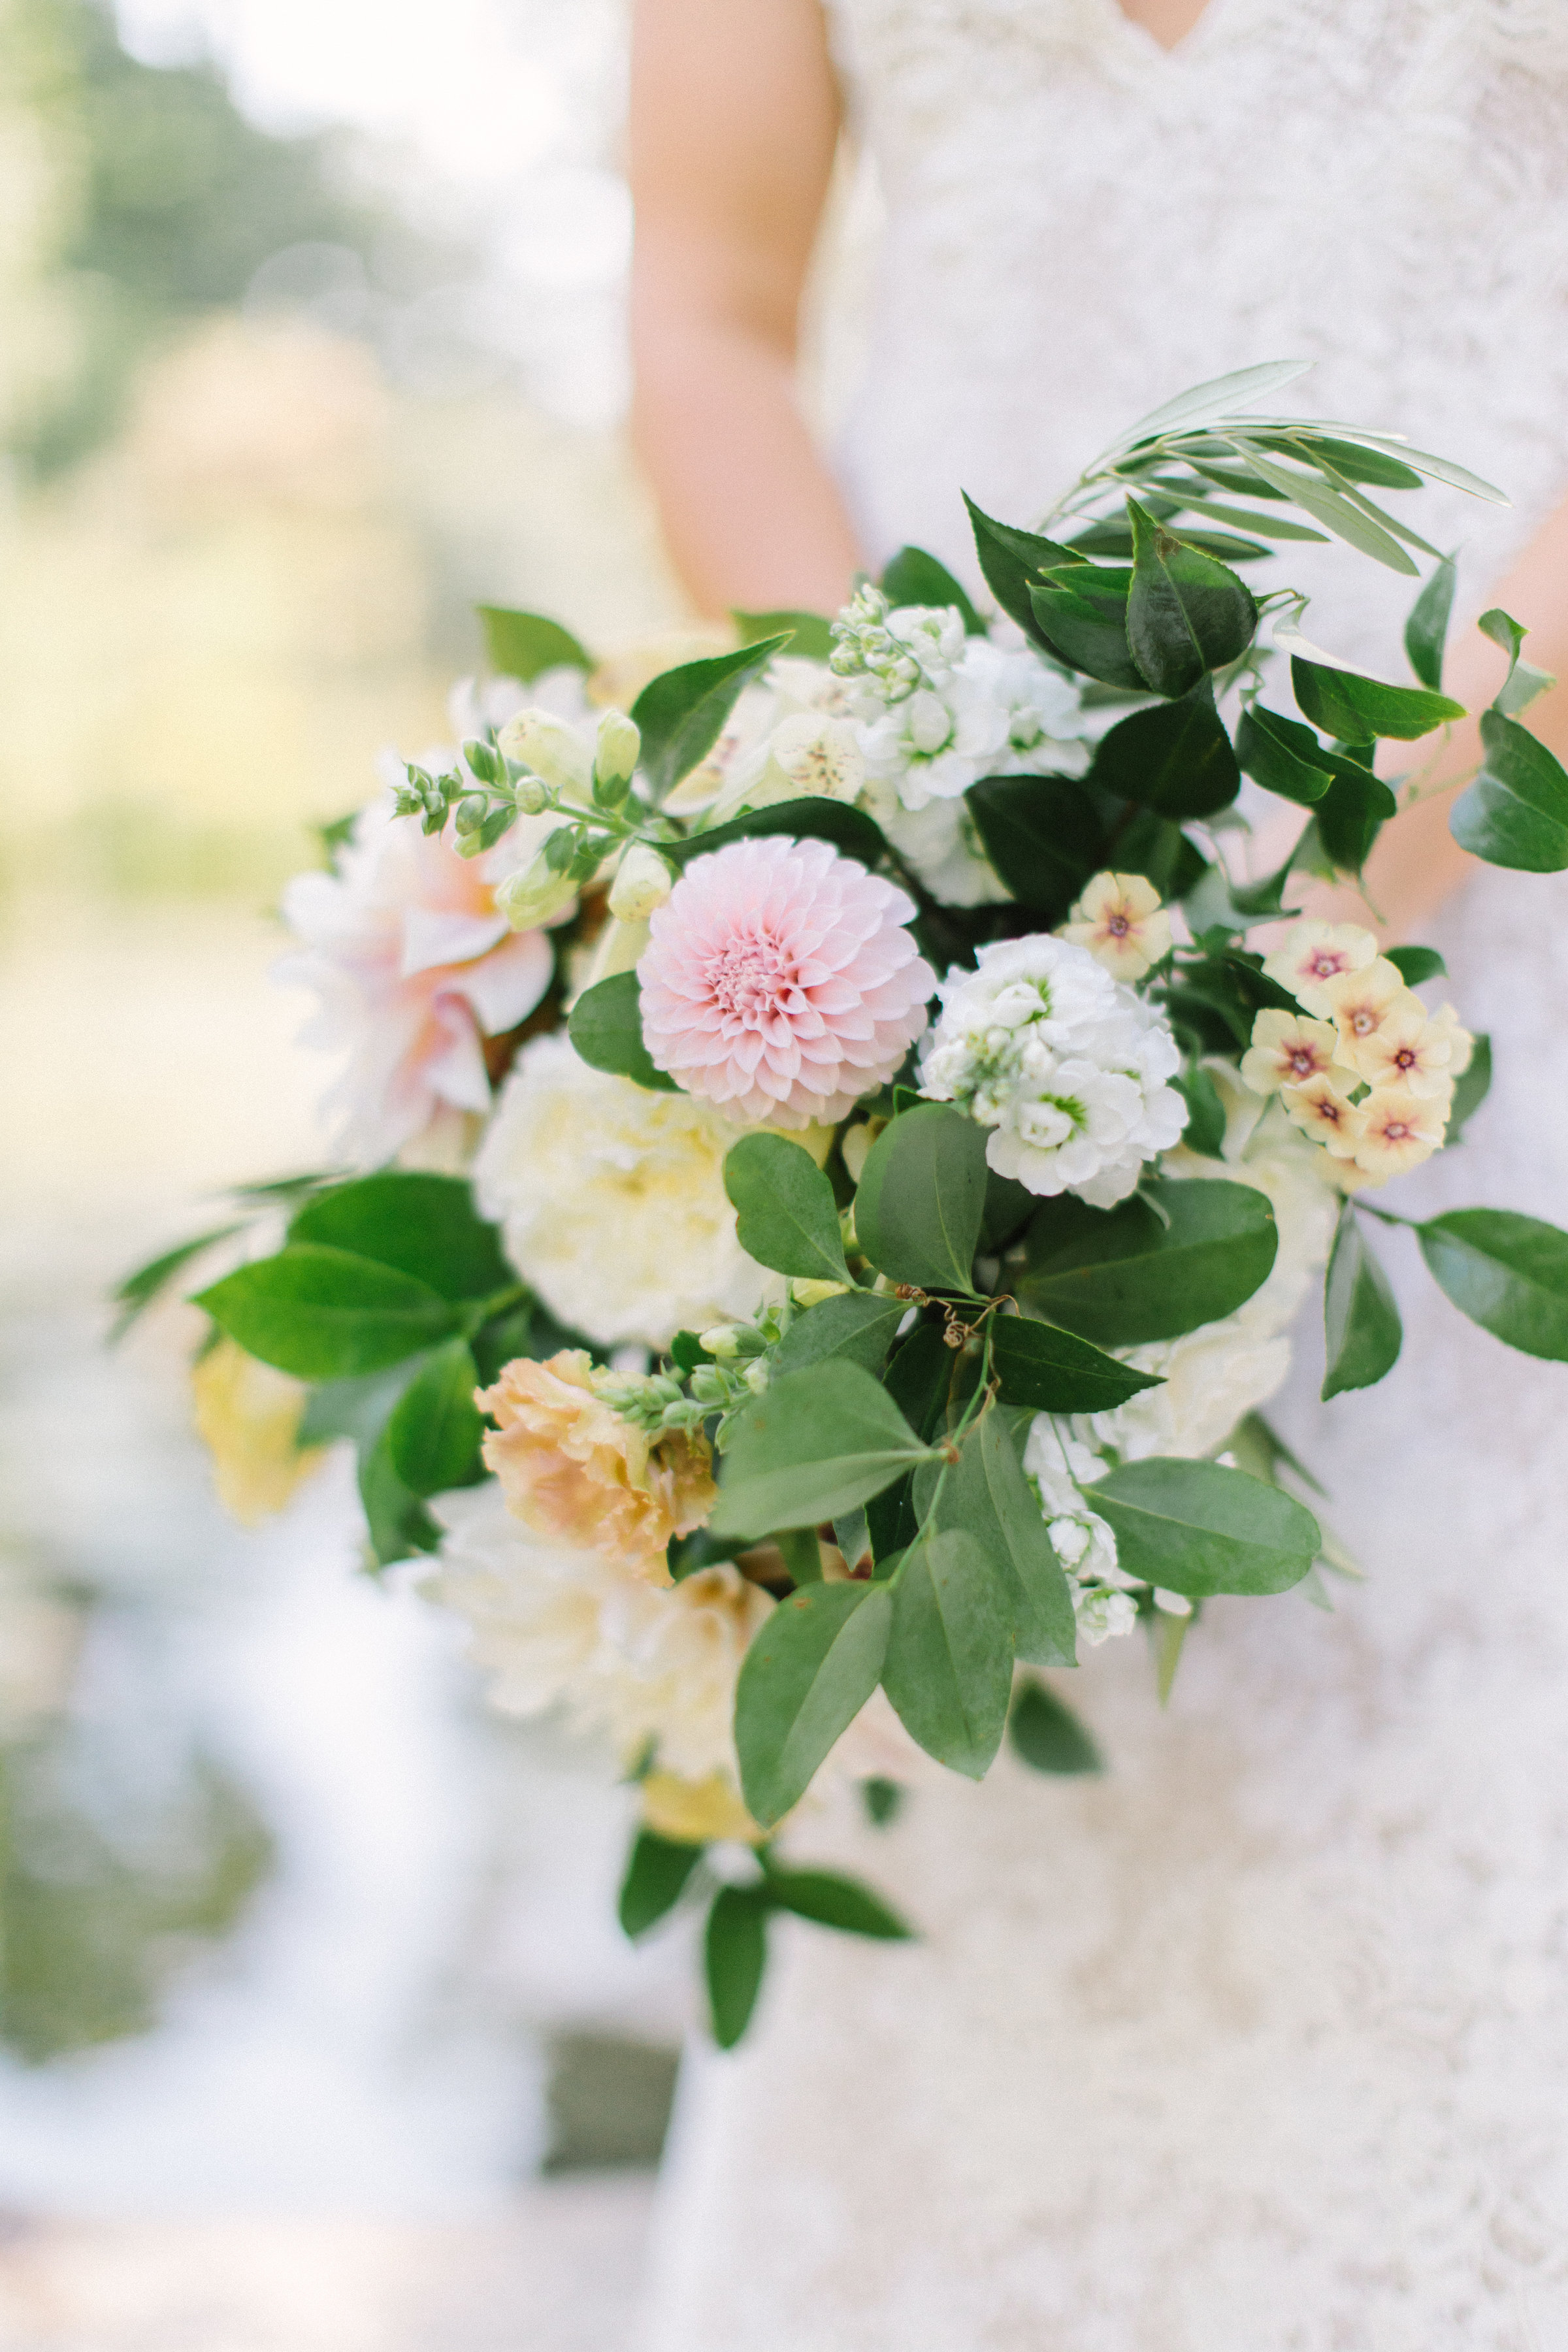 September wedding bouquet in cream, blush, white, rose